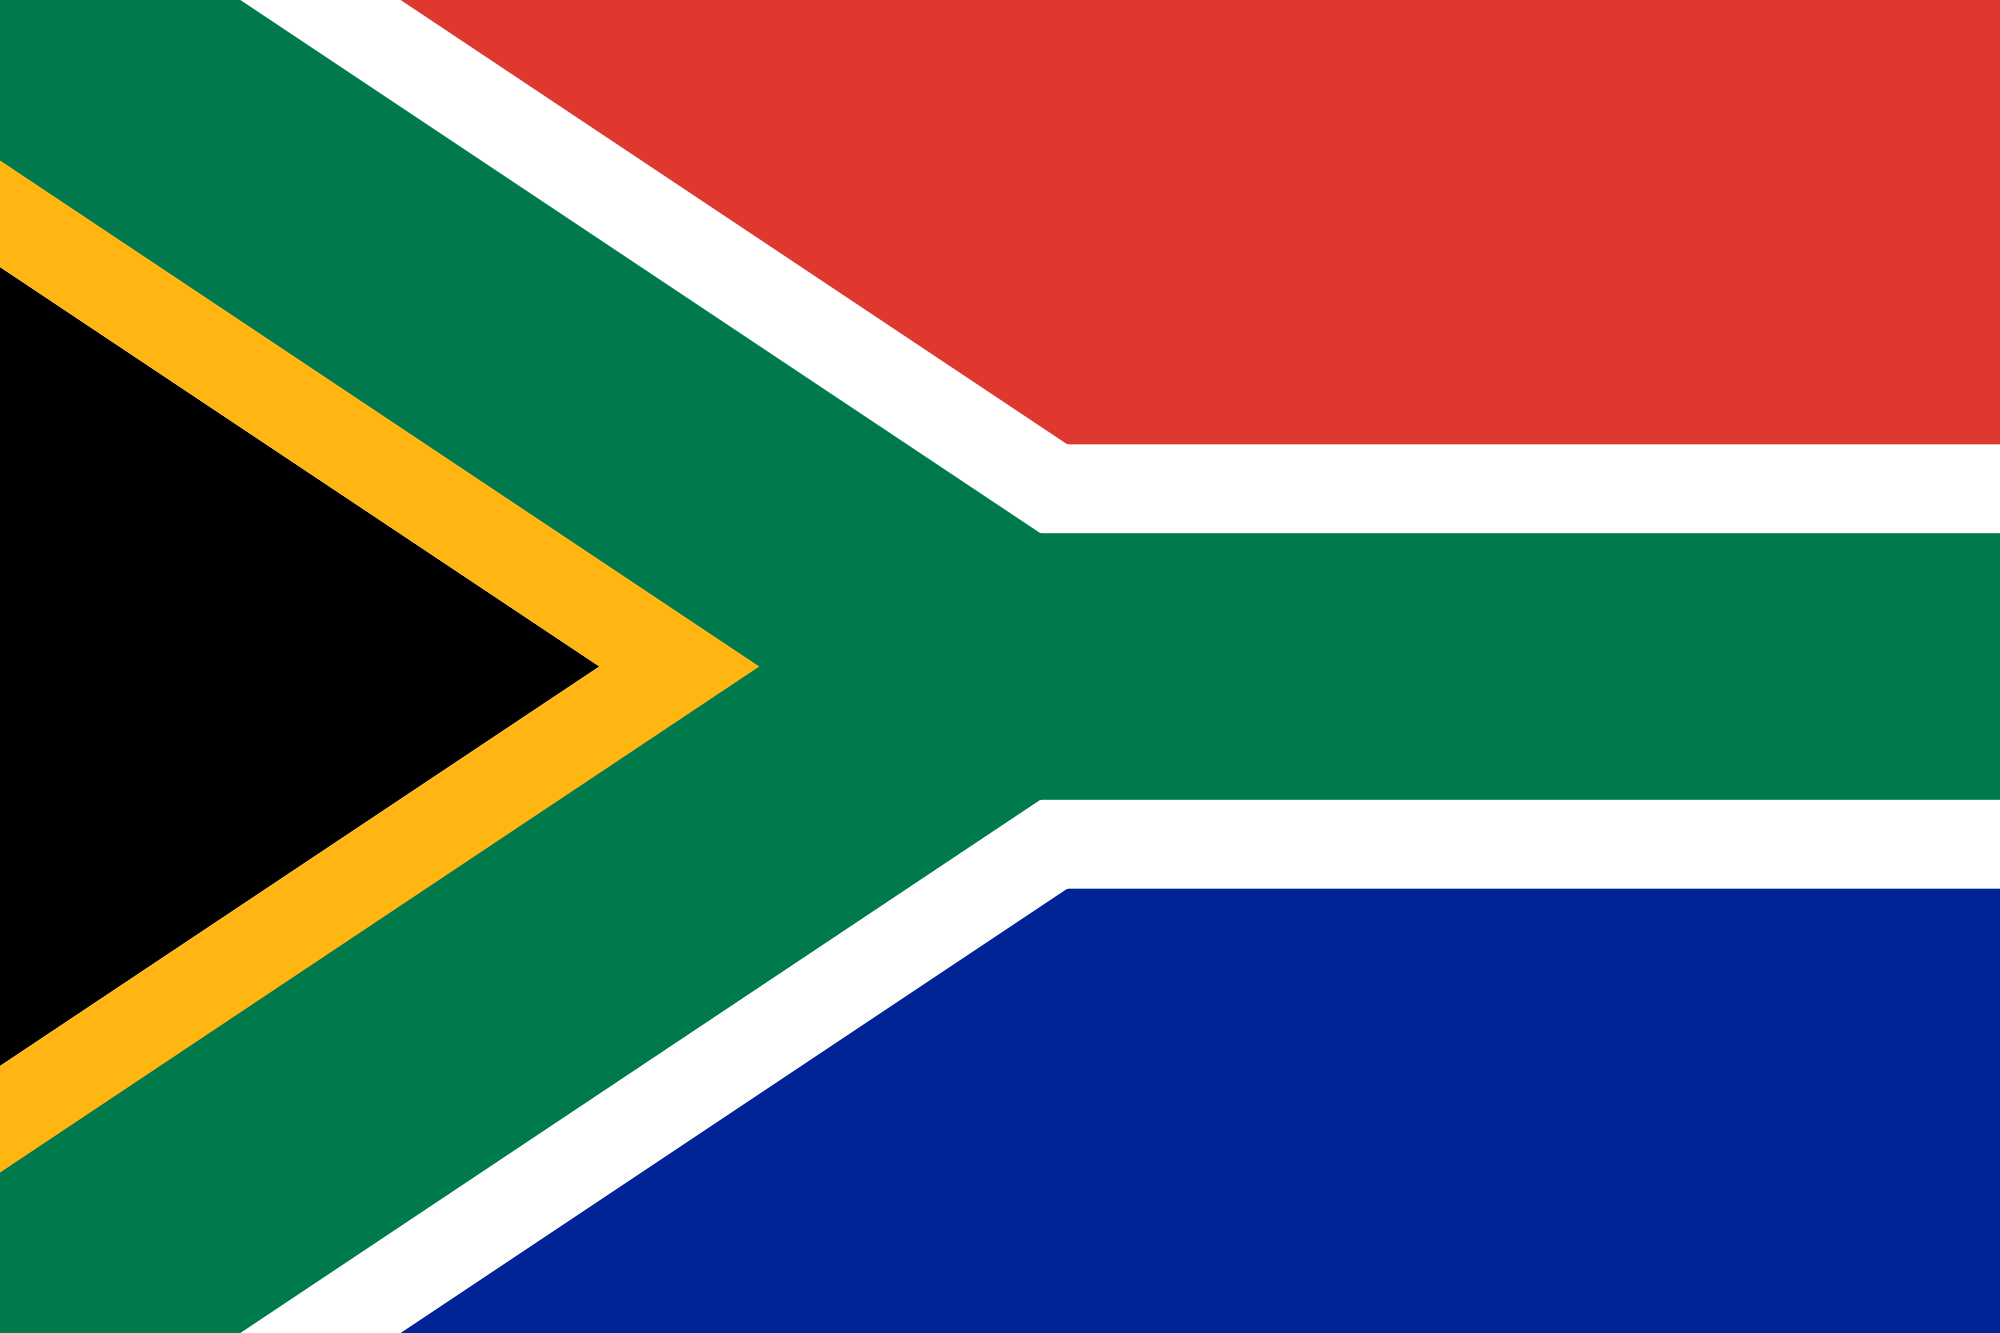 SOUTH AFRICA (la chaolin team)